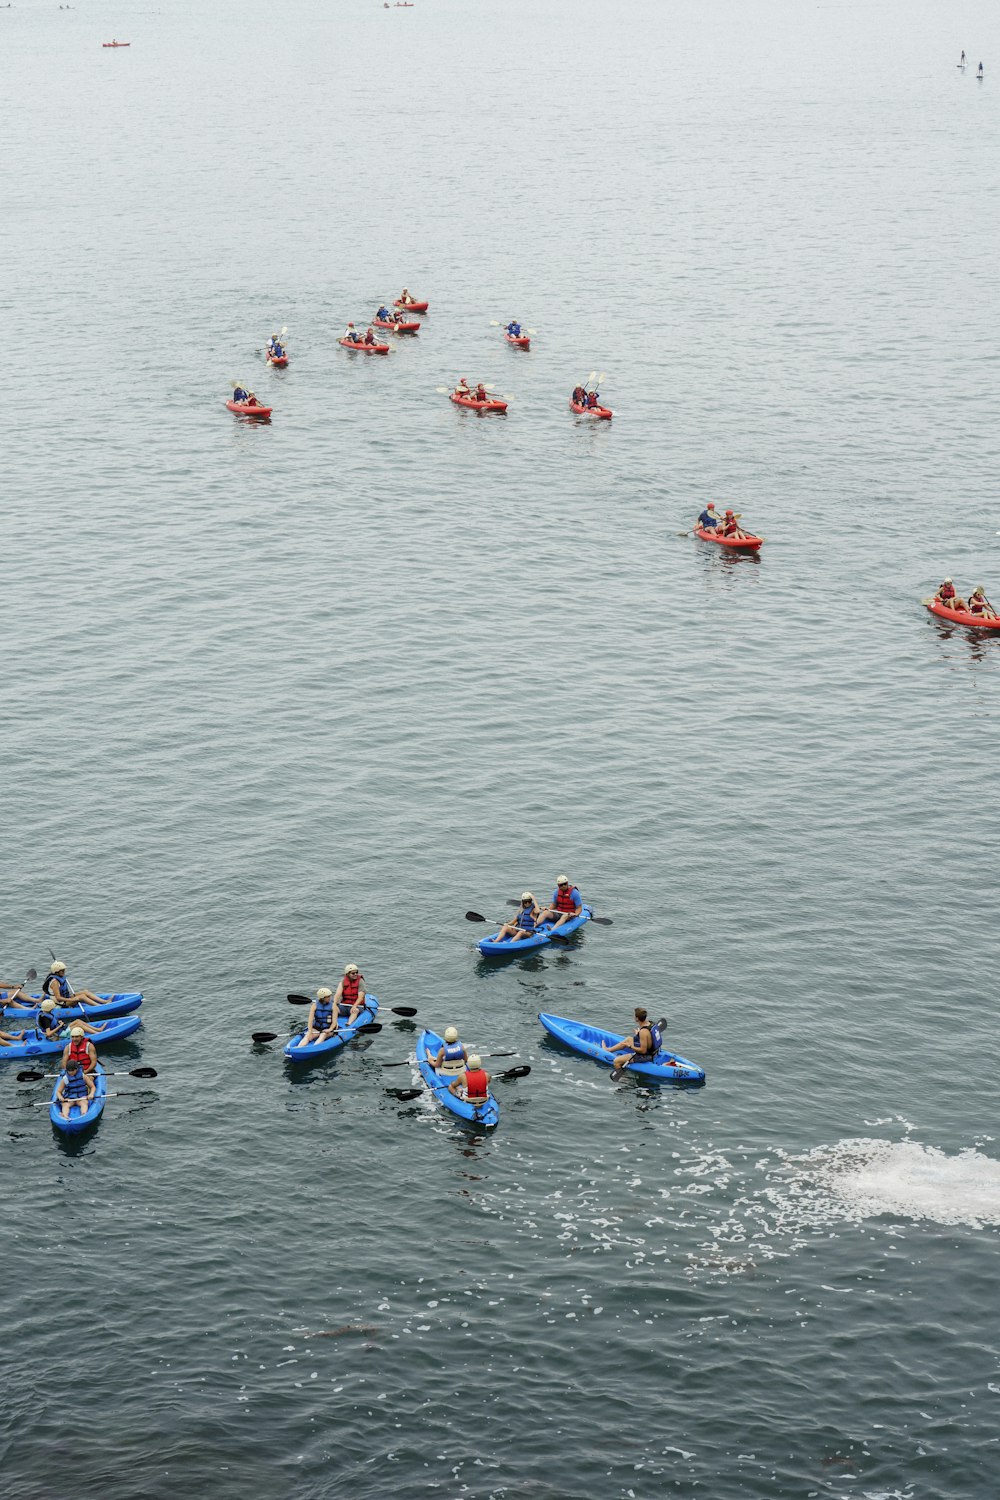 people riding on blue kayak on body of water during daytime